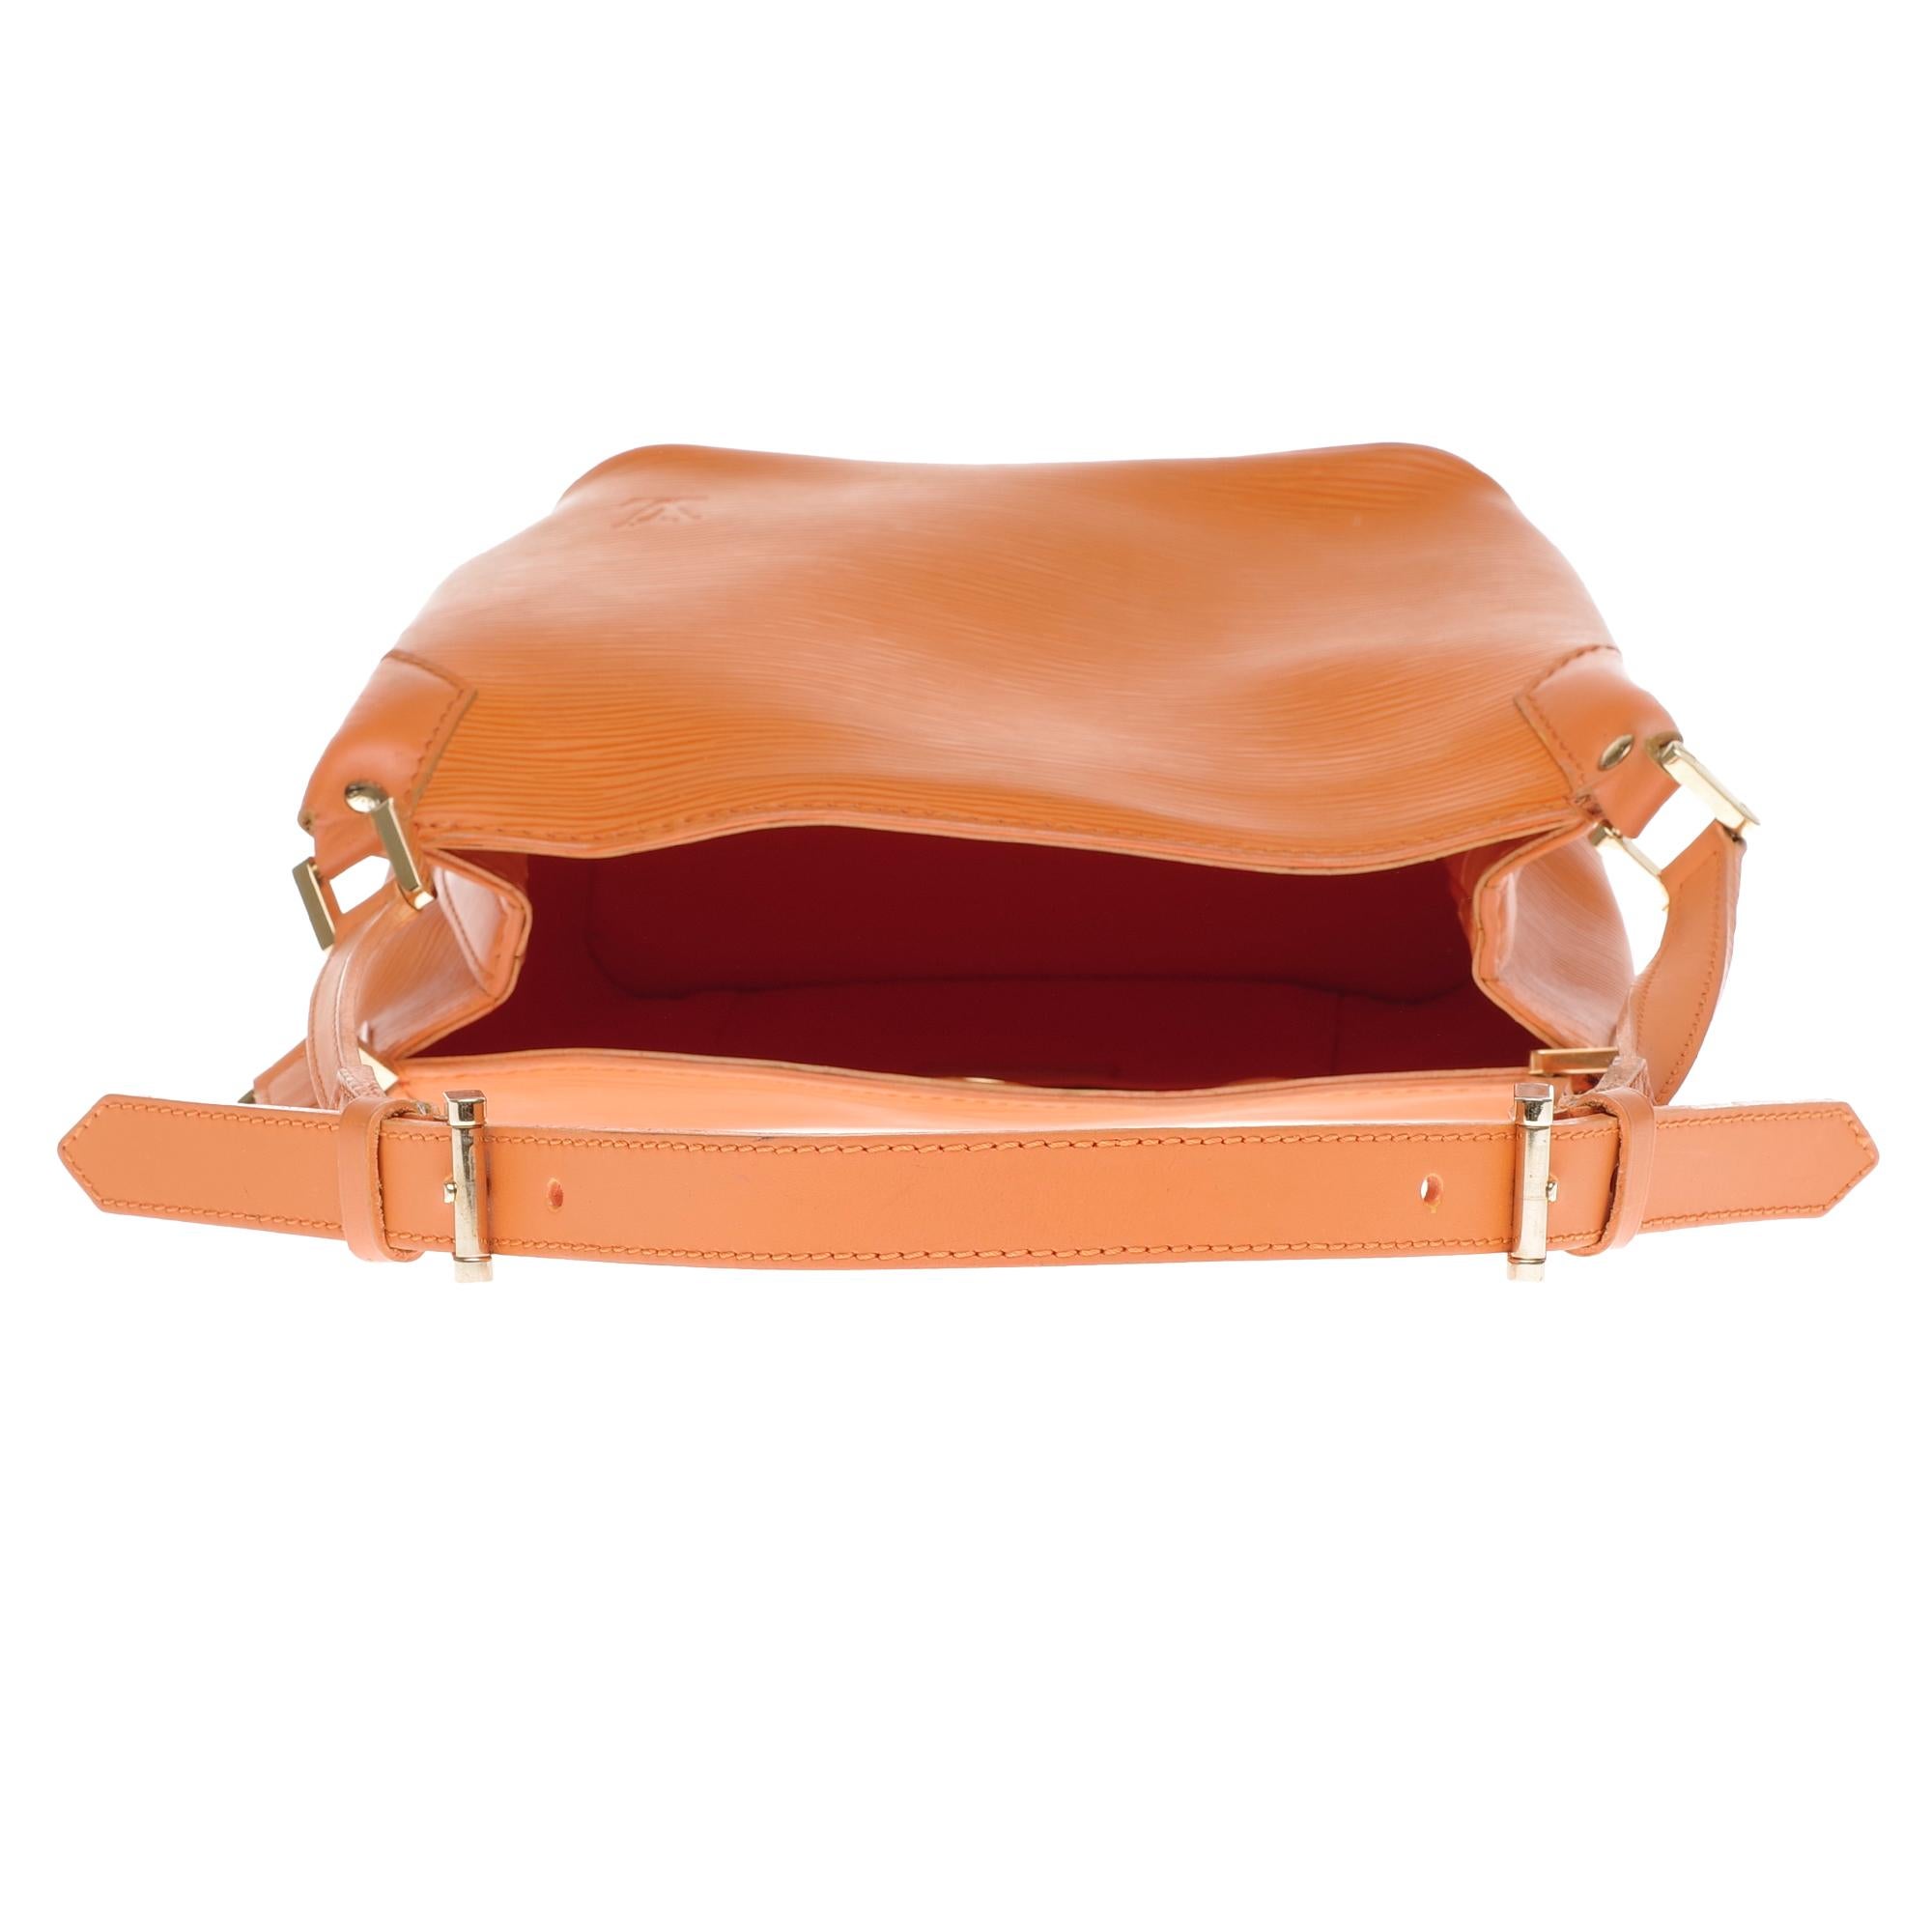 Louis Vuitton Mandara PM hand bag in orange epi leather with gold hardware 3